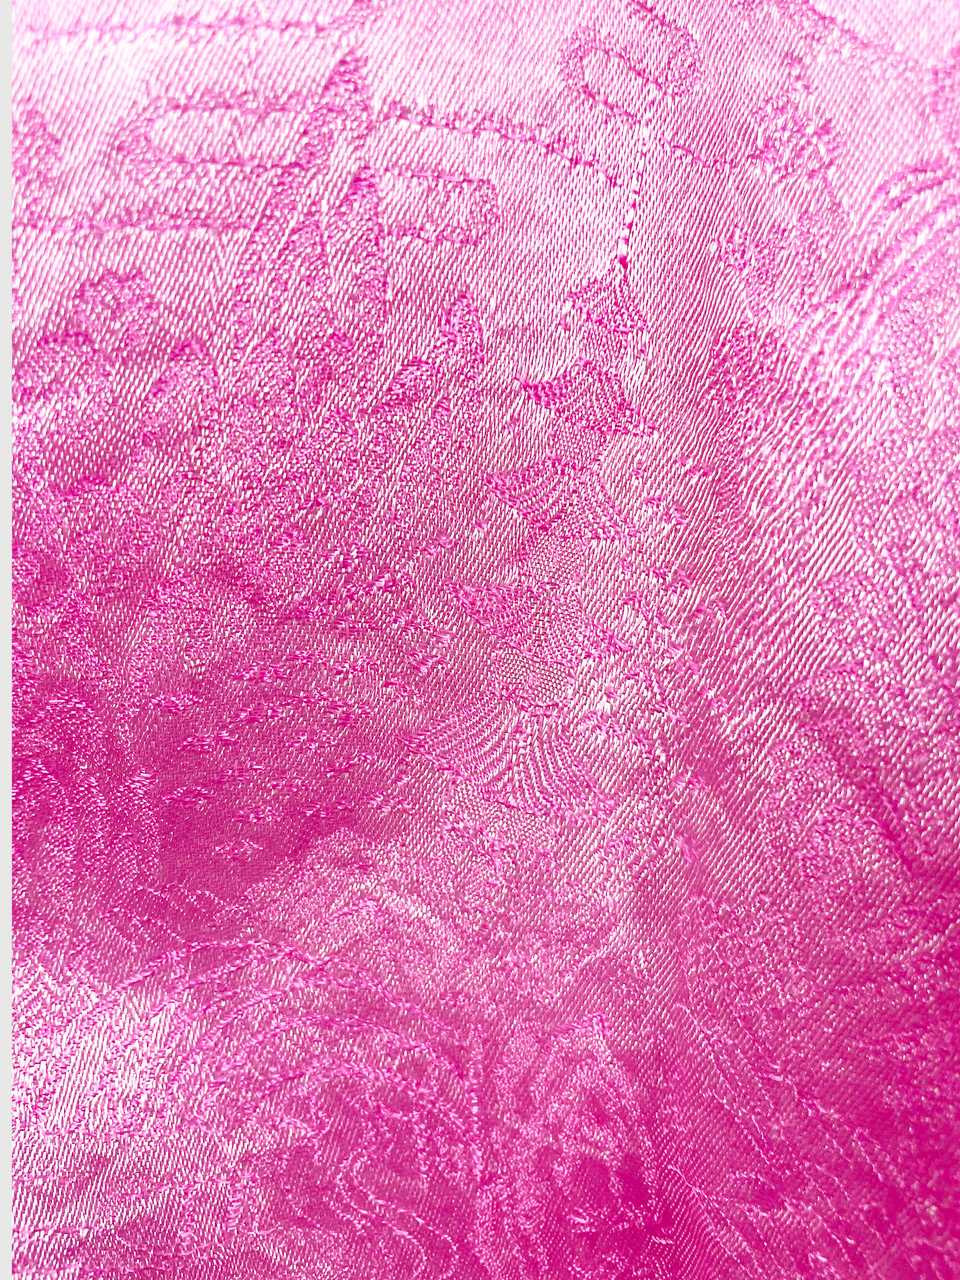 Pure Silk Pink Japanese Robe